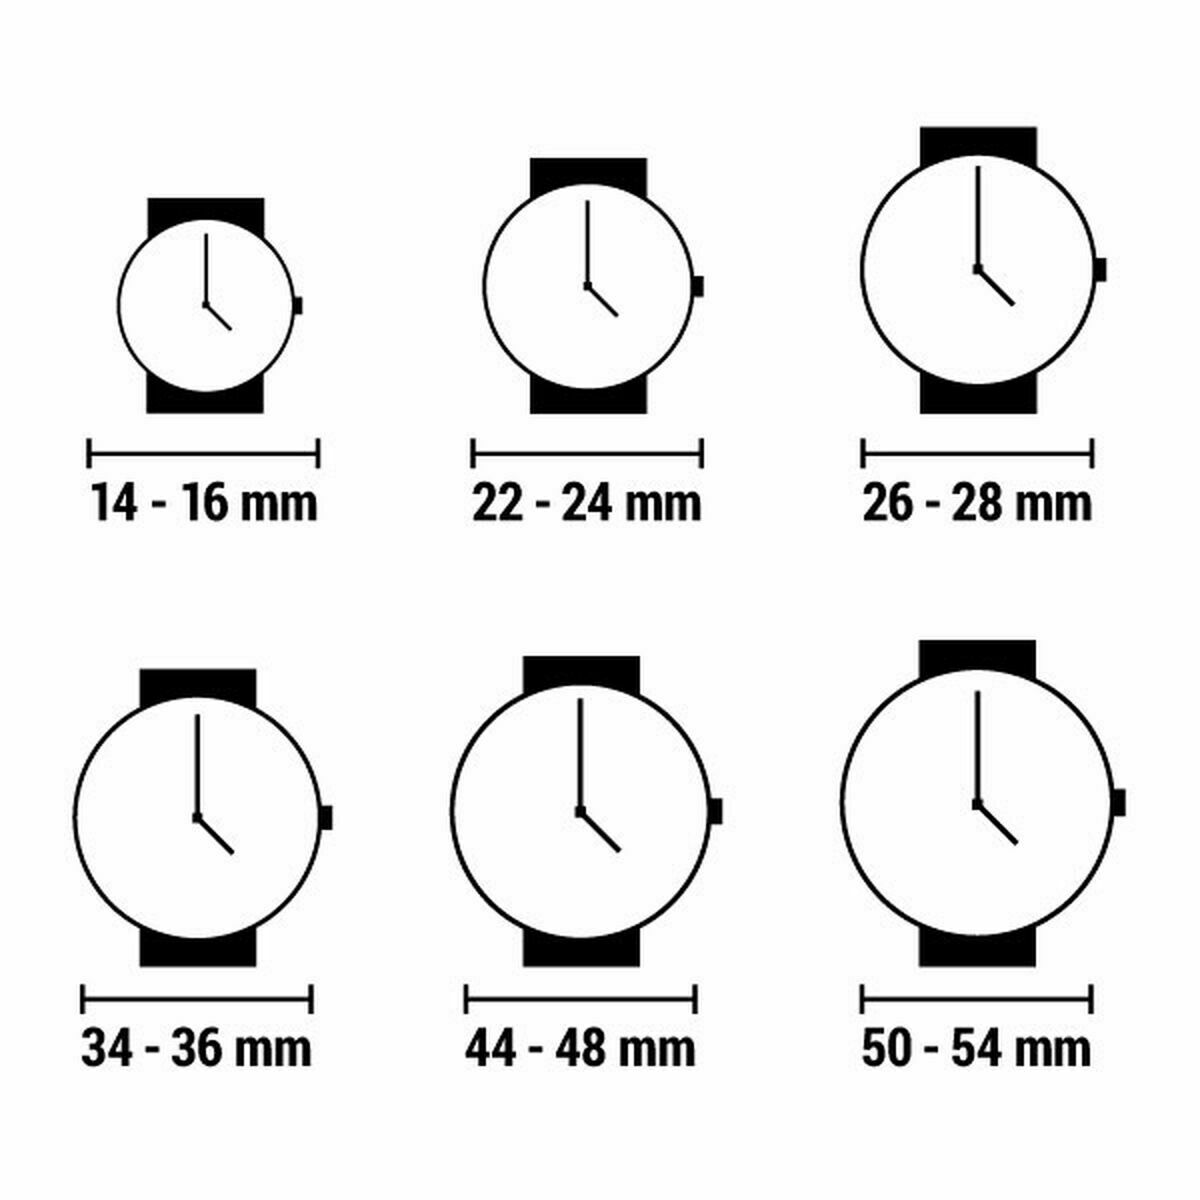 Horloge Dames Casio COLLECTION Wit (Ø 34 mm)